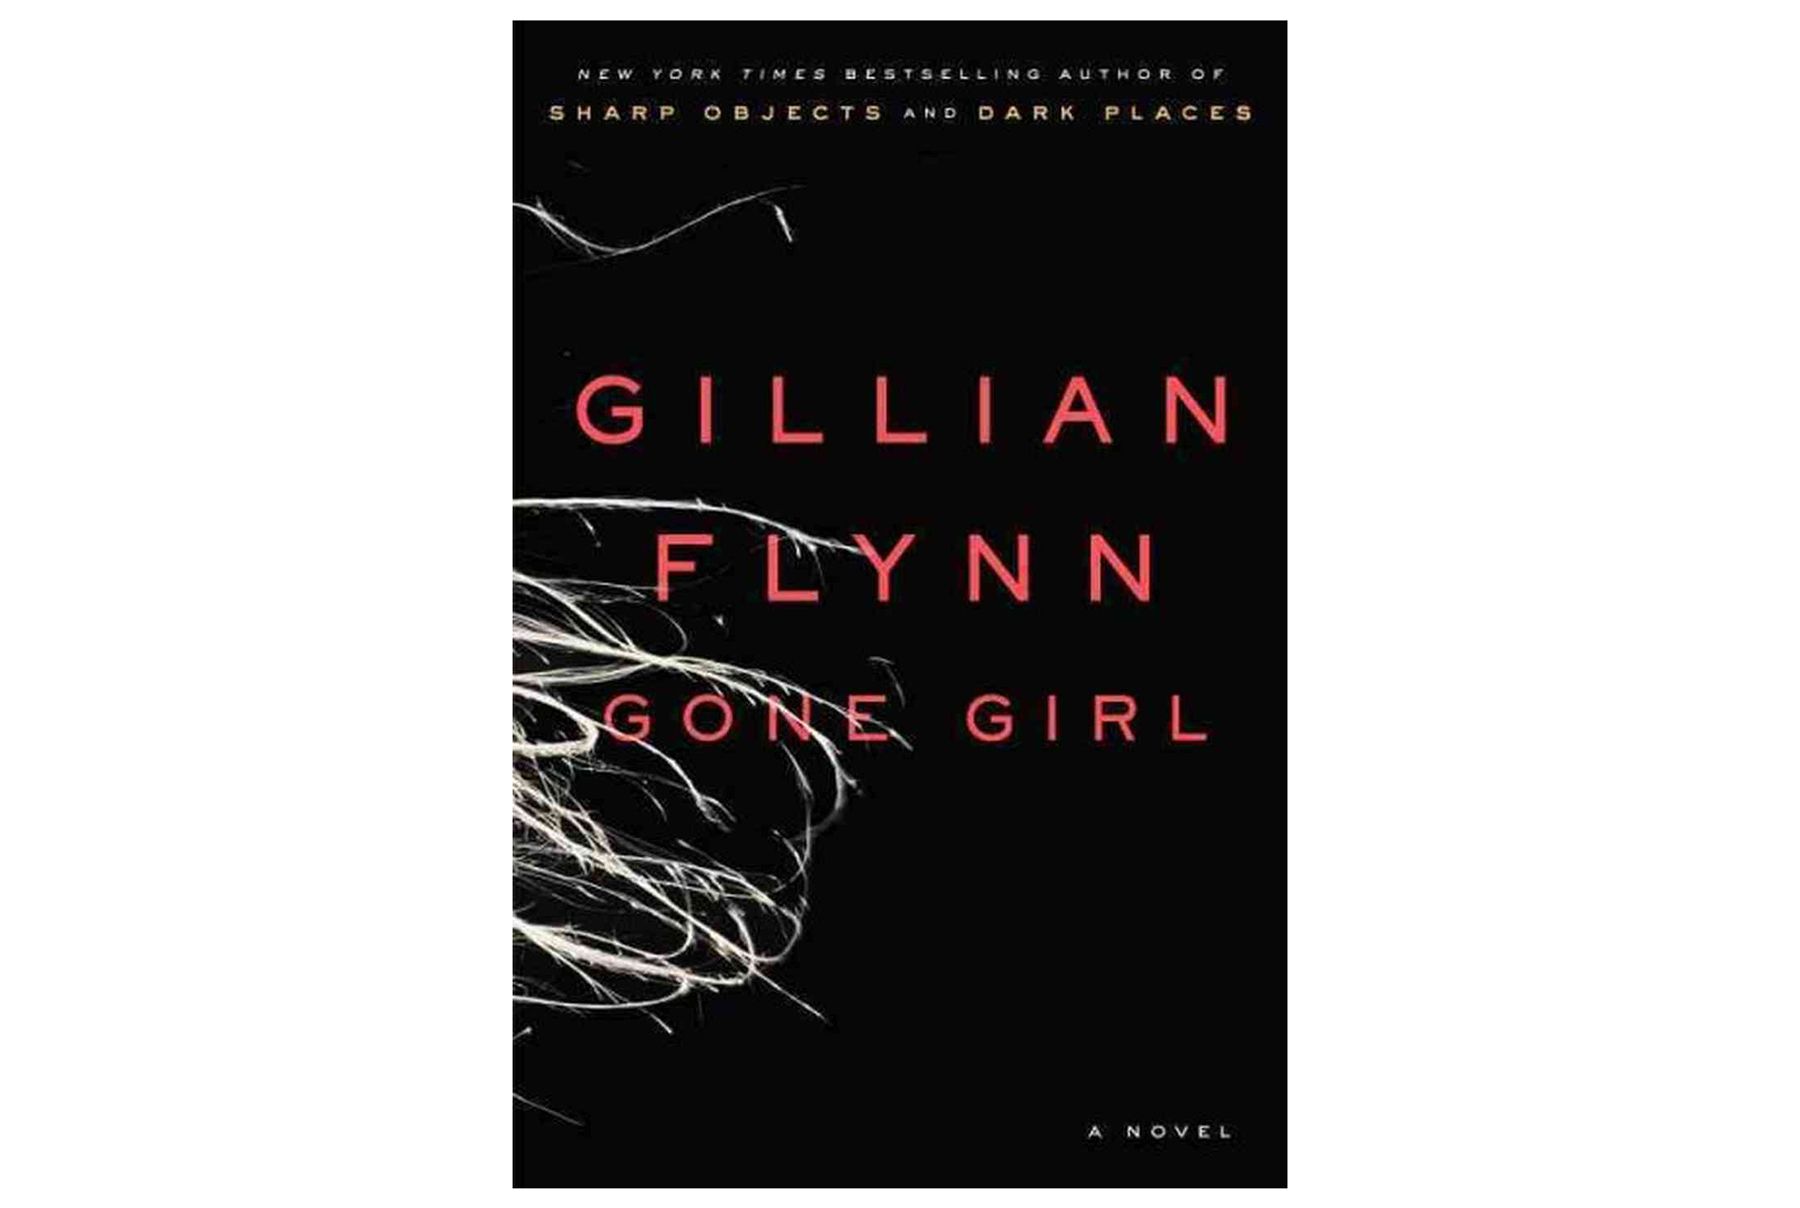 Goneian Flynni Gone Girl